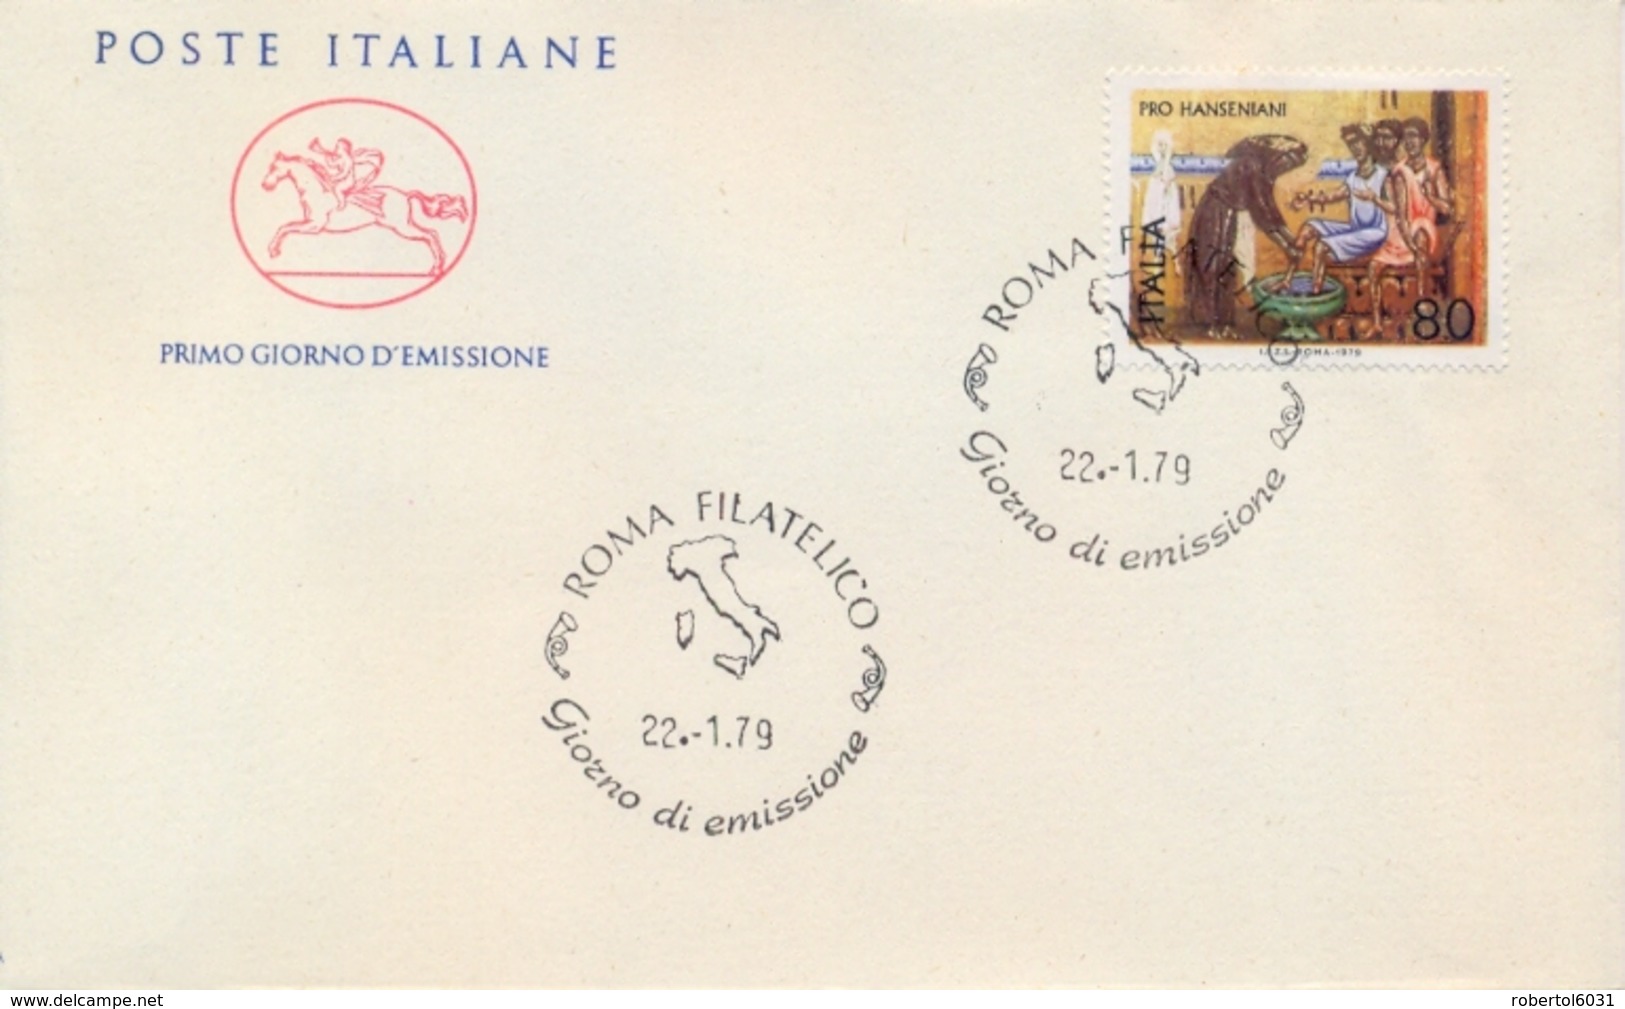 Italia Italy 1979 FDC CAVALLINO For Leprosy Patients Pro Hanseniani - Malattie